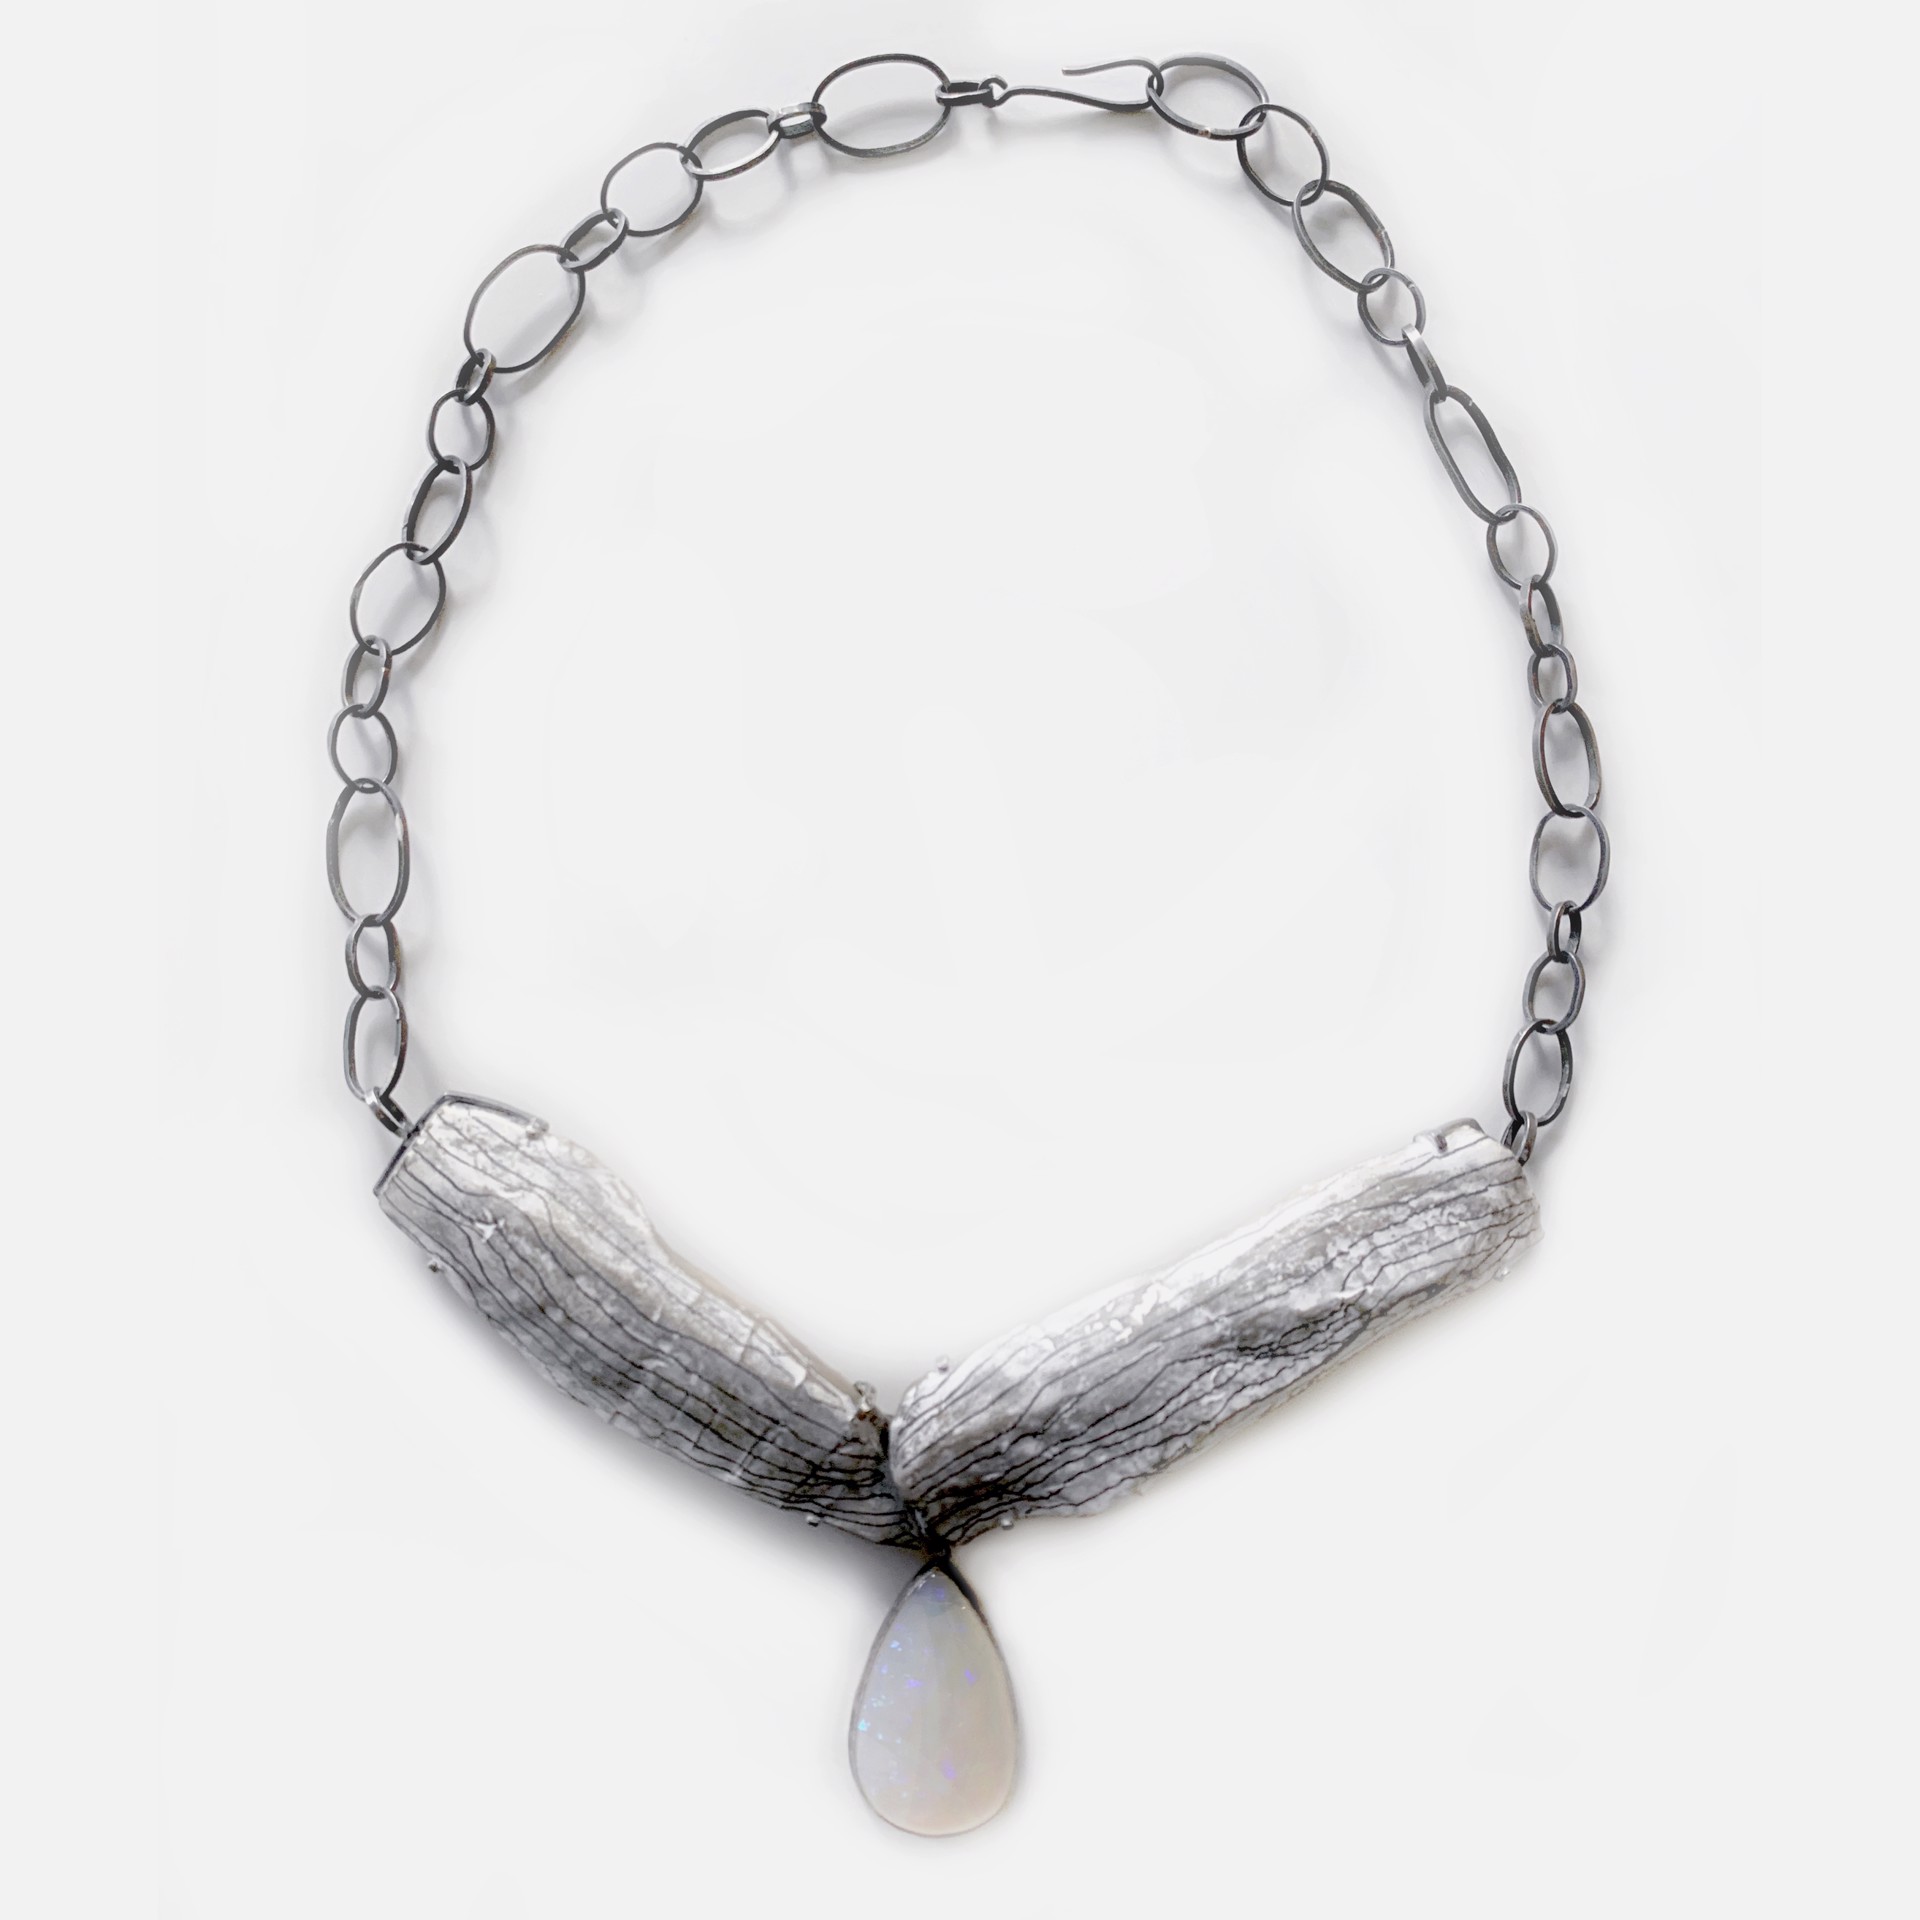 Opal Drop Necklace by Bettina Speckner